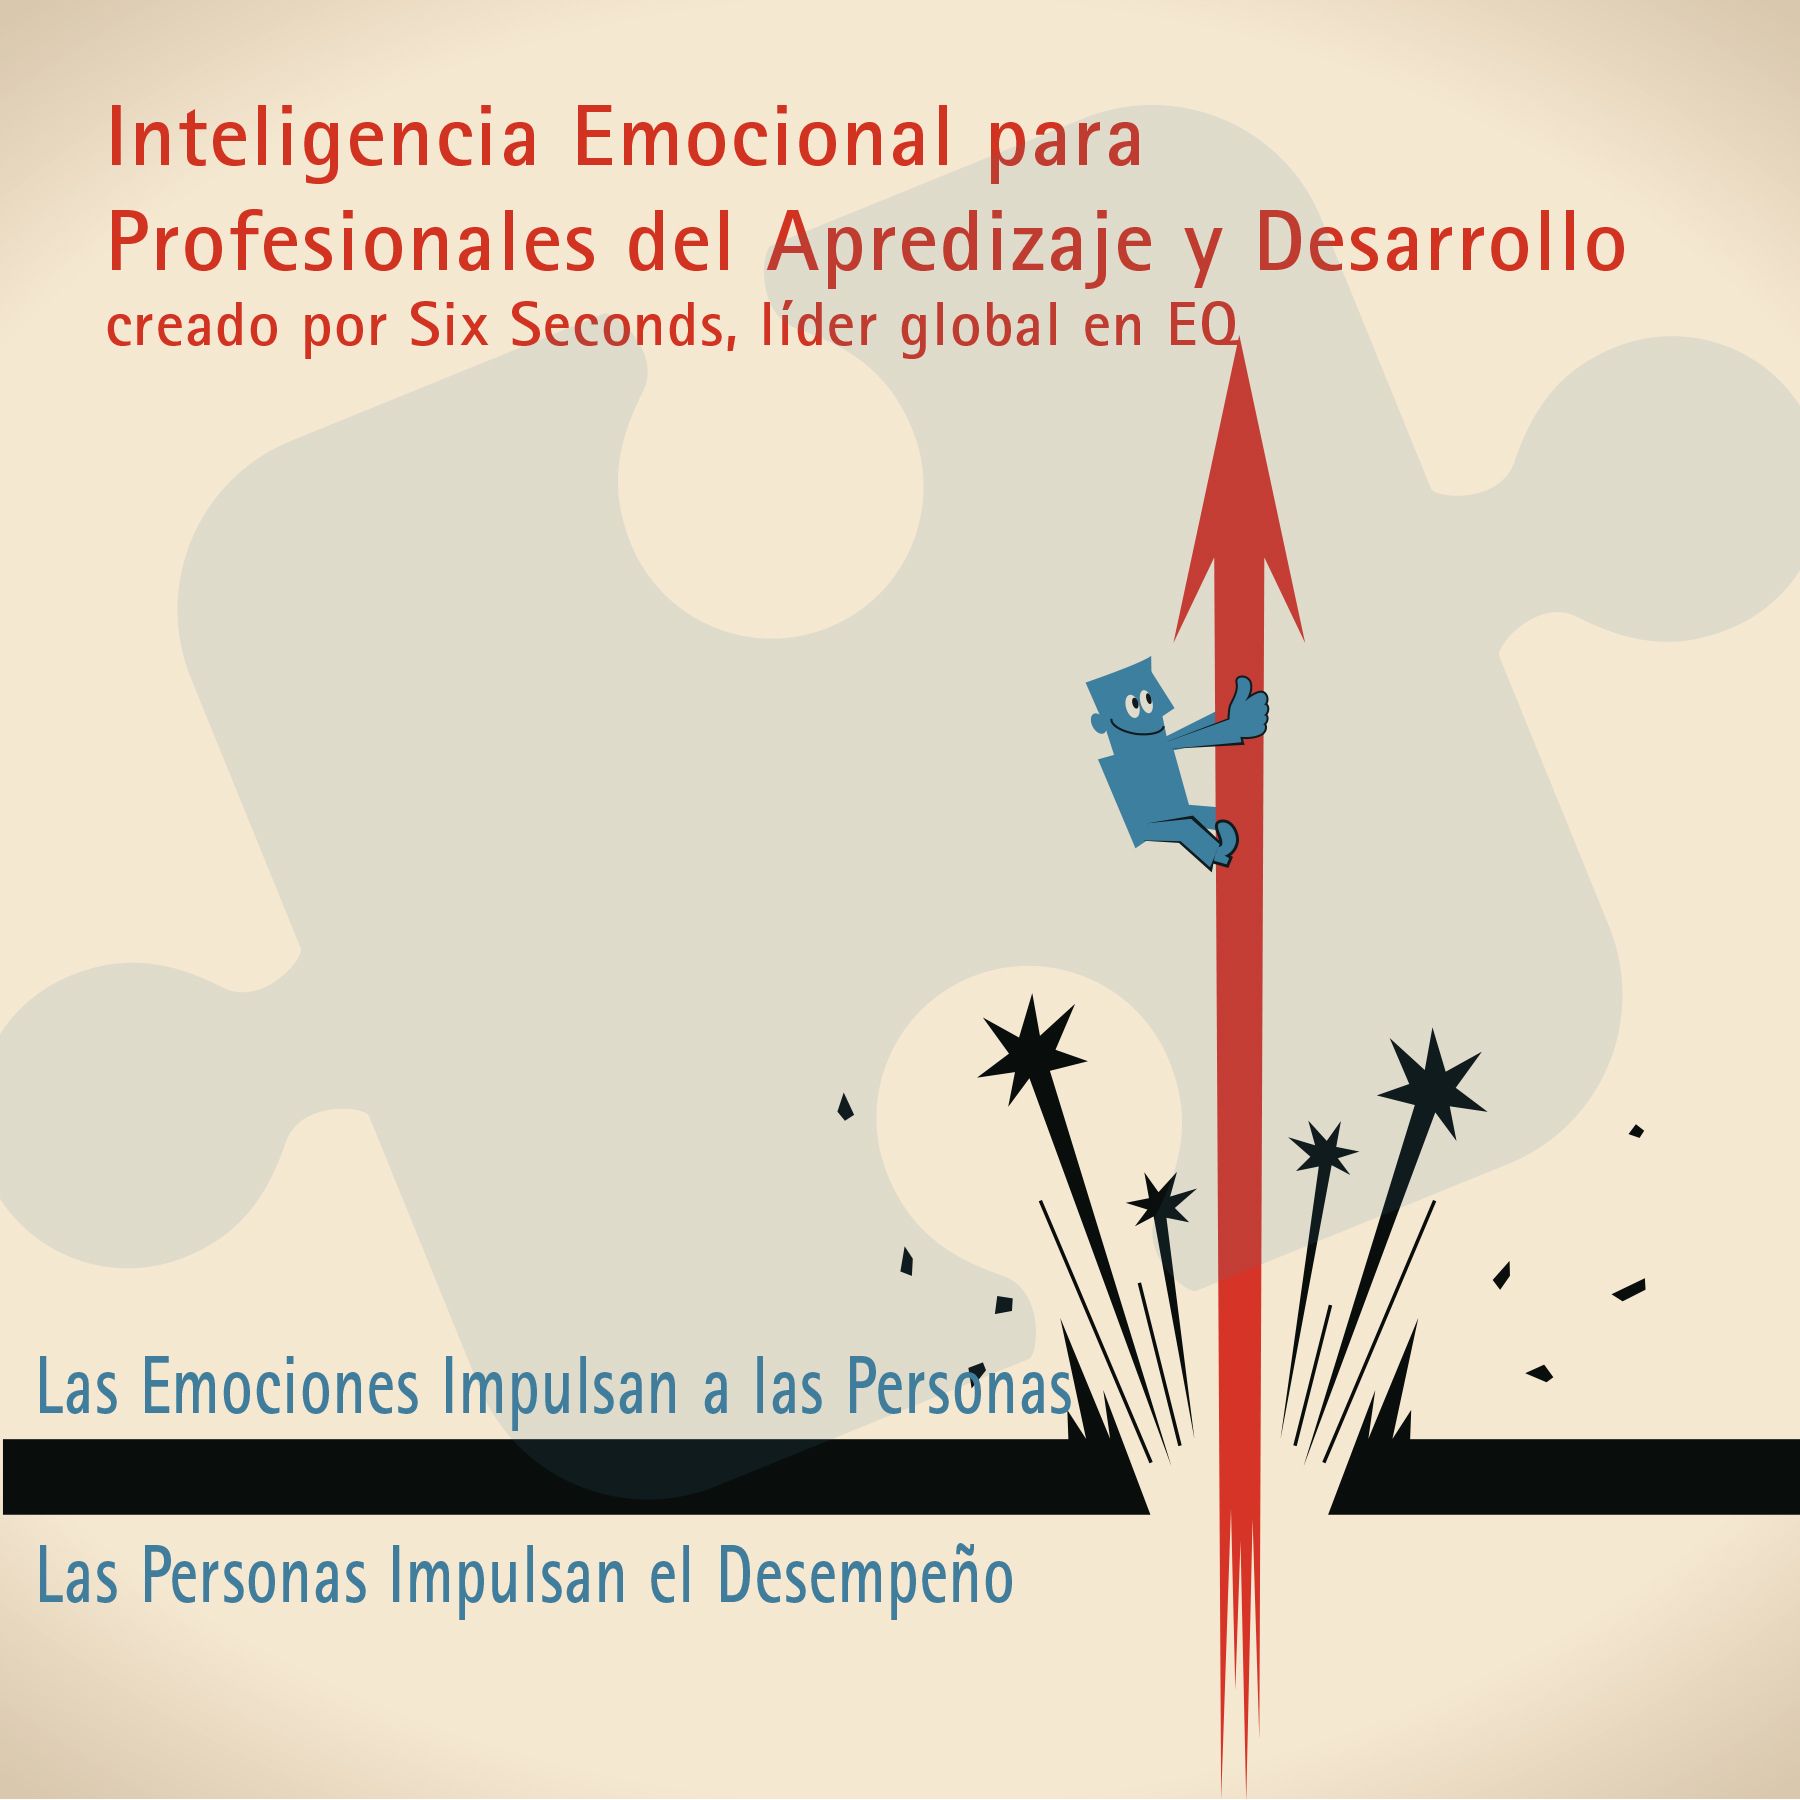 eBook: Emotional Intelligence for Learning & Development Professionals